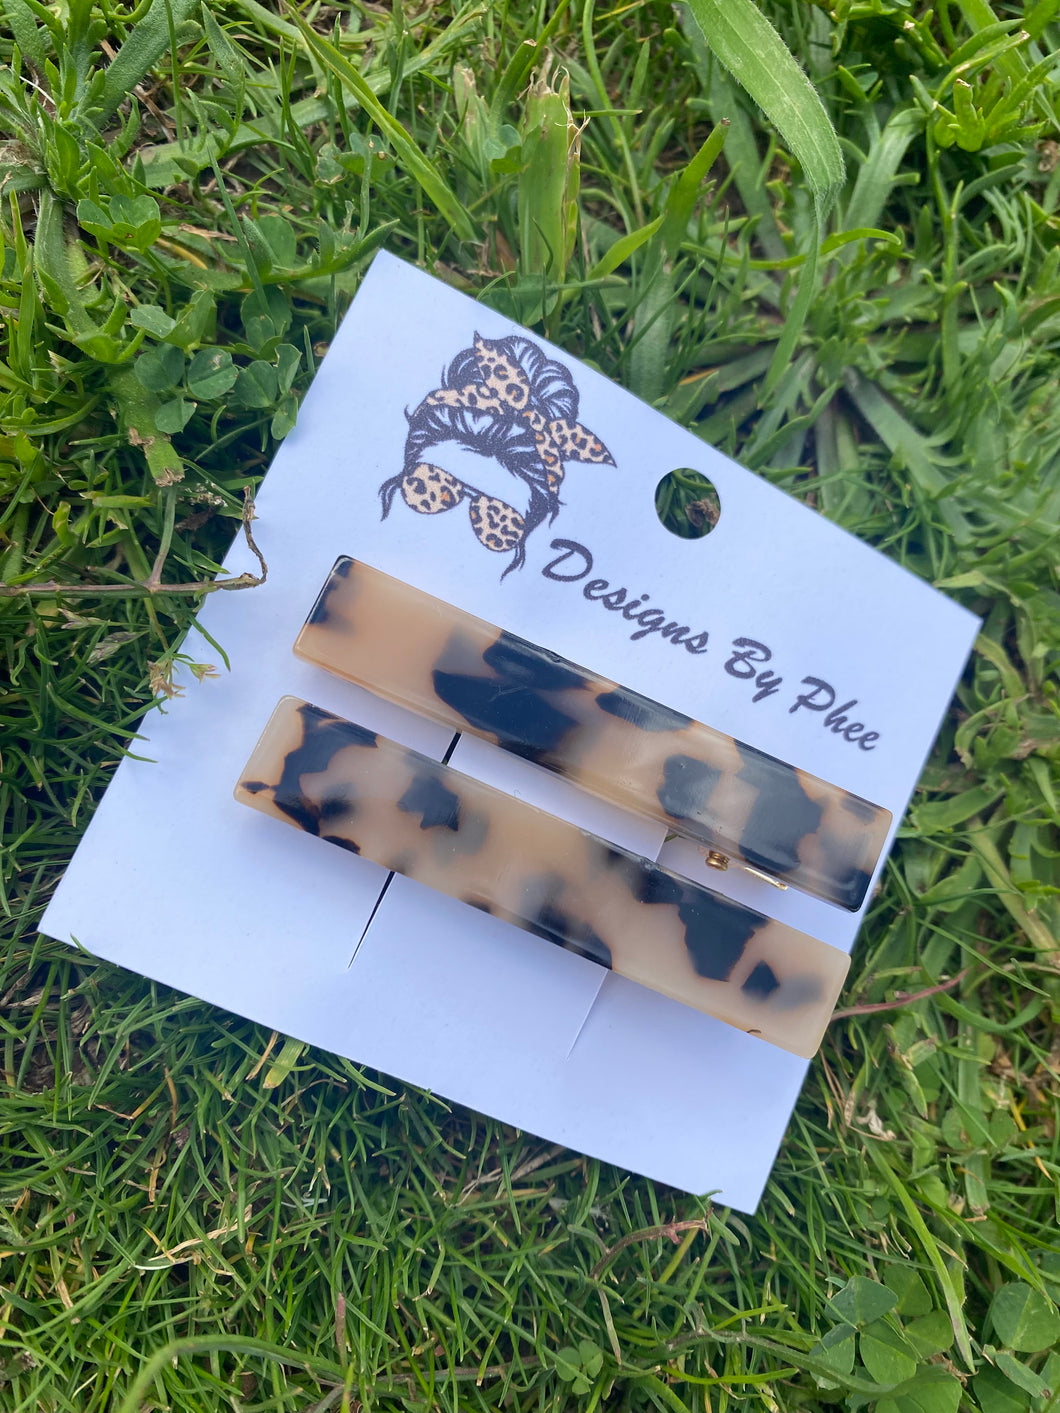 Leopard hair clips